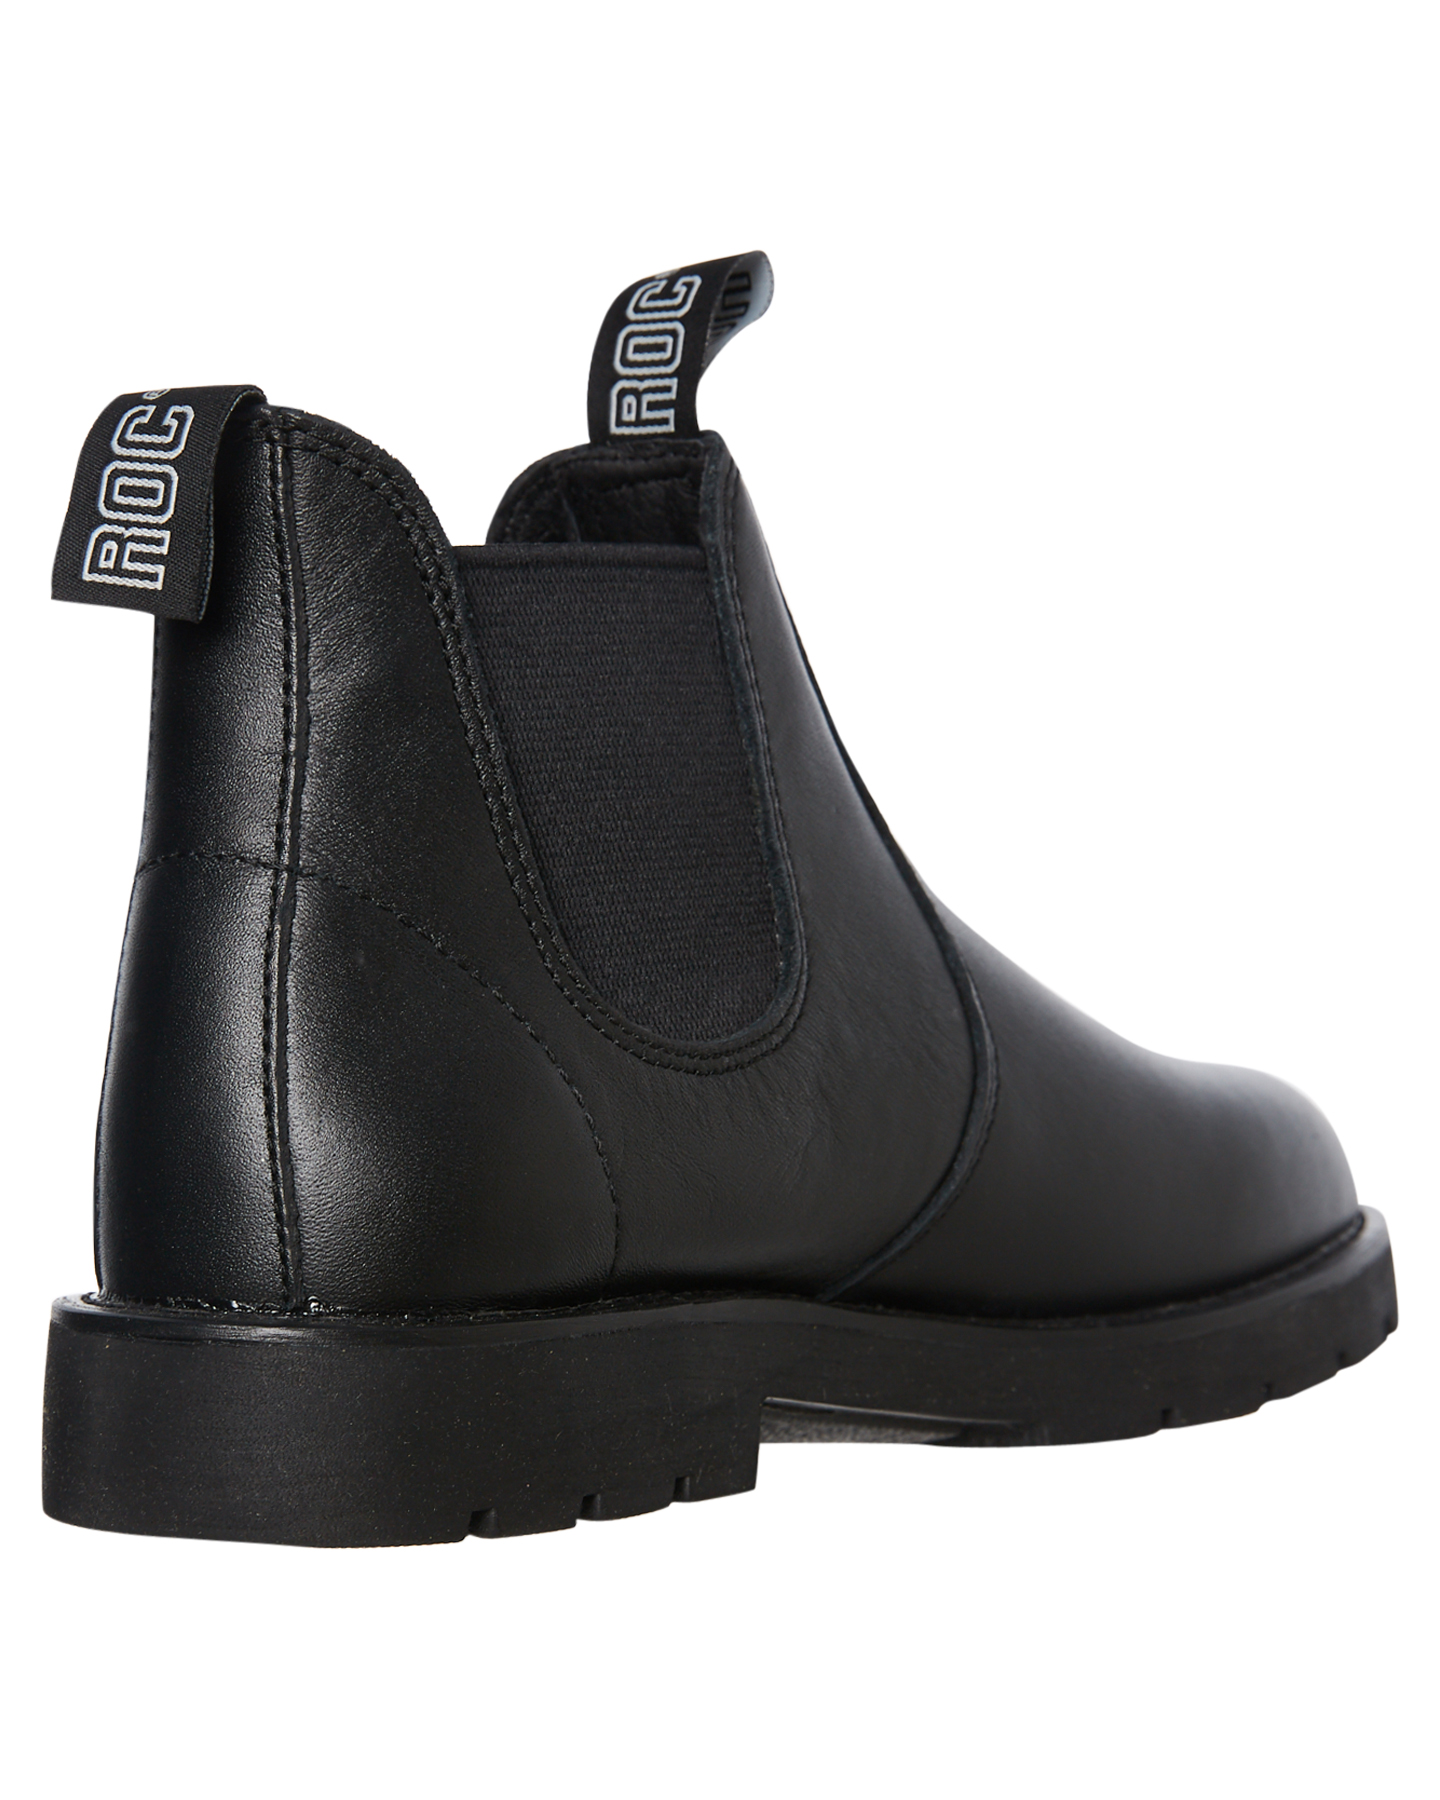 Roc Boots Australia Womens Jumbuk Boot - Black Leather | SurfStitch